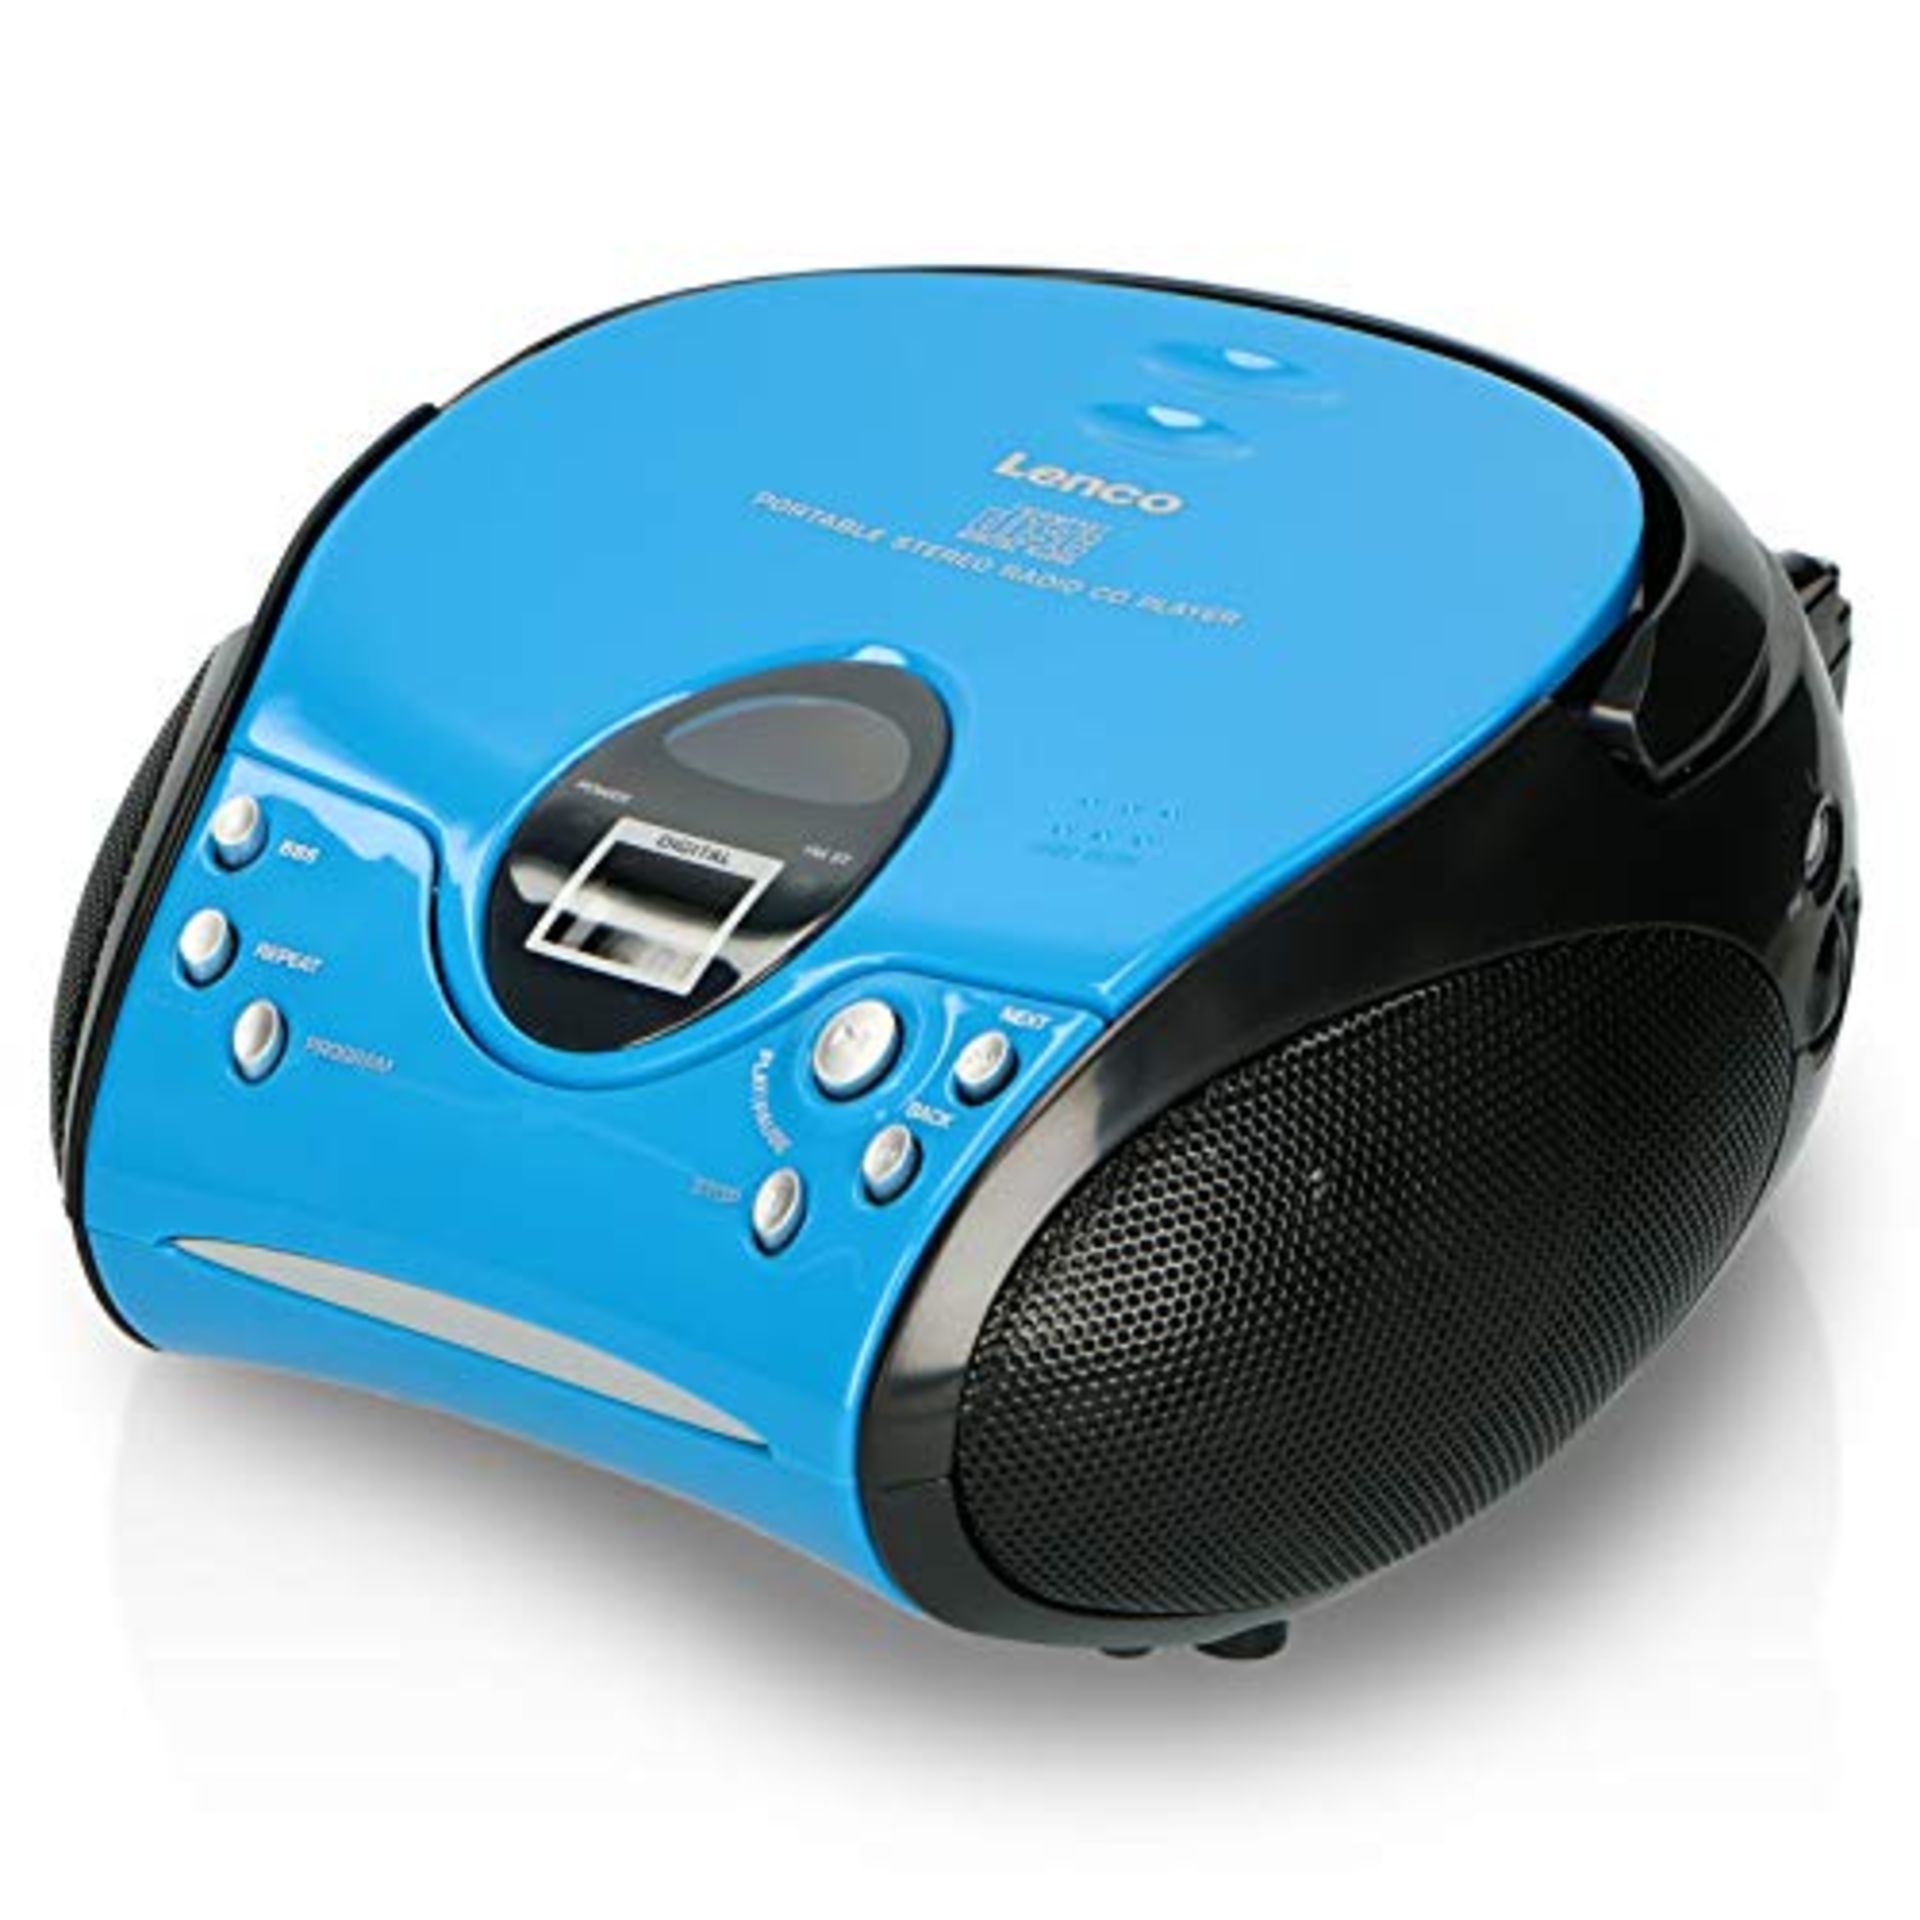 Lenco SCD24 - CD-Player fÃ¼r Kinder - CD-Radio - Stereoanlage - Boombox - UKW Radiot